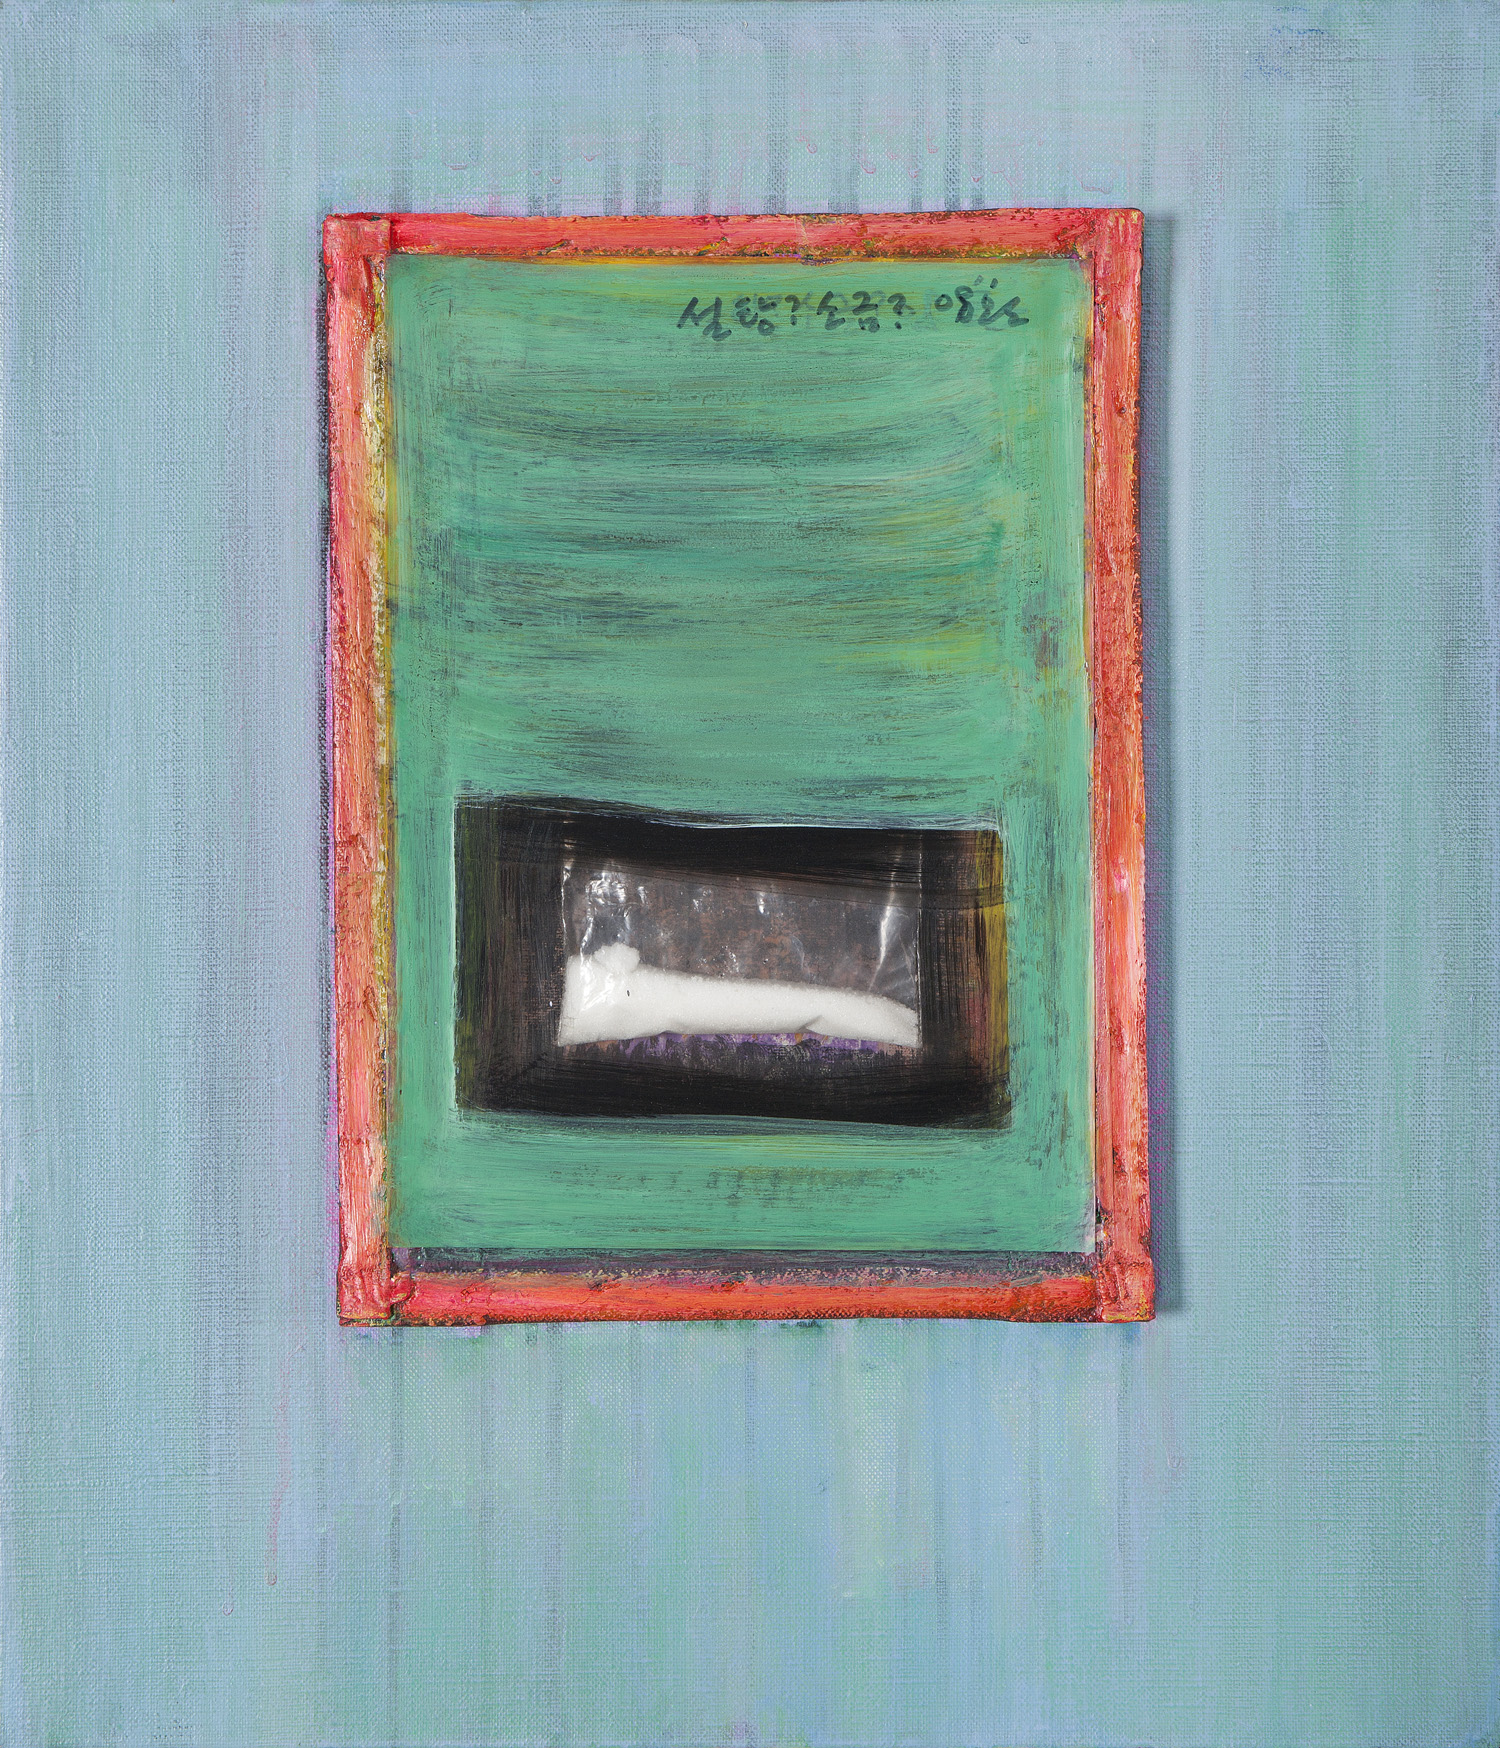 Sugar Salt, 2008, Oil and sugar or salt on canvas, 53x45.5x4cm